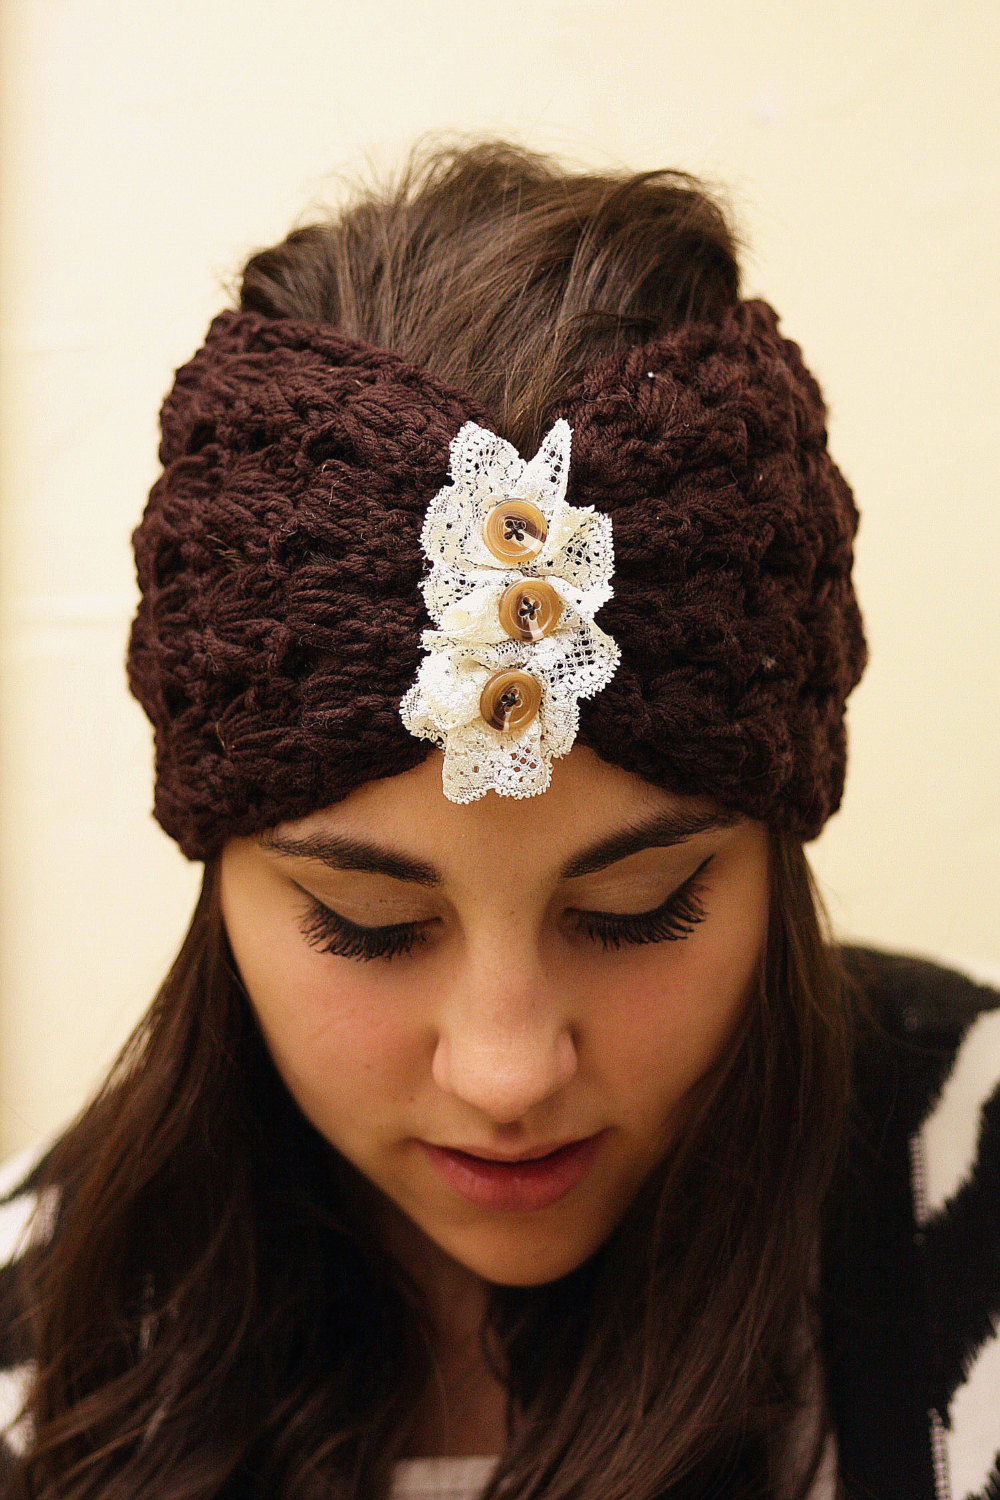 Headband - Knitted , Open-work, Chocolate Brown, Ivory Lace, Accordion, Wide Headband, Turban,